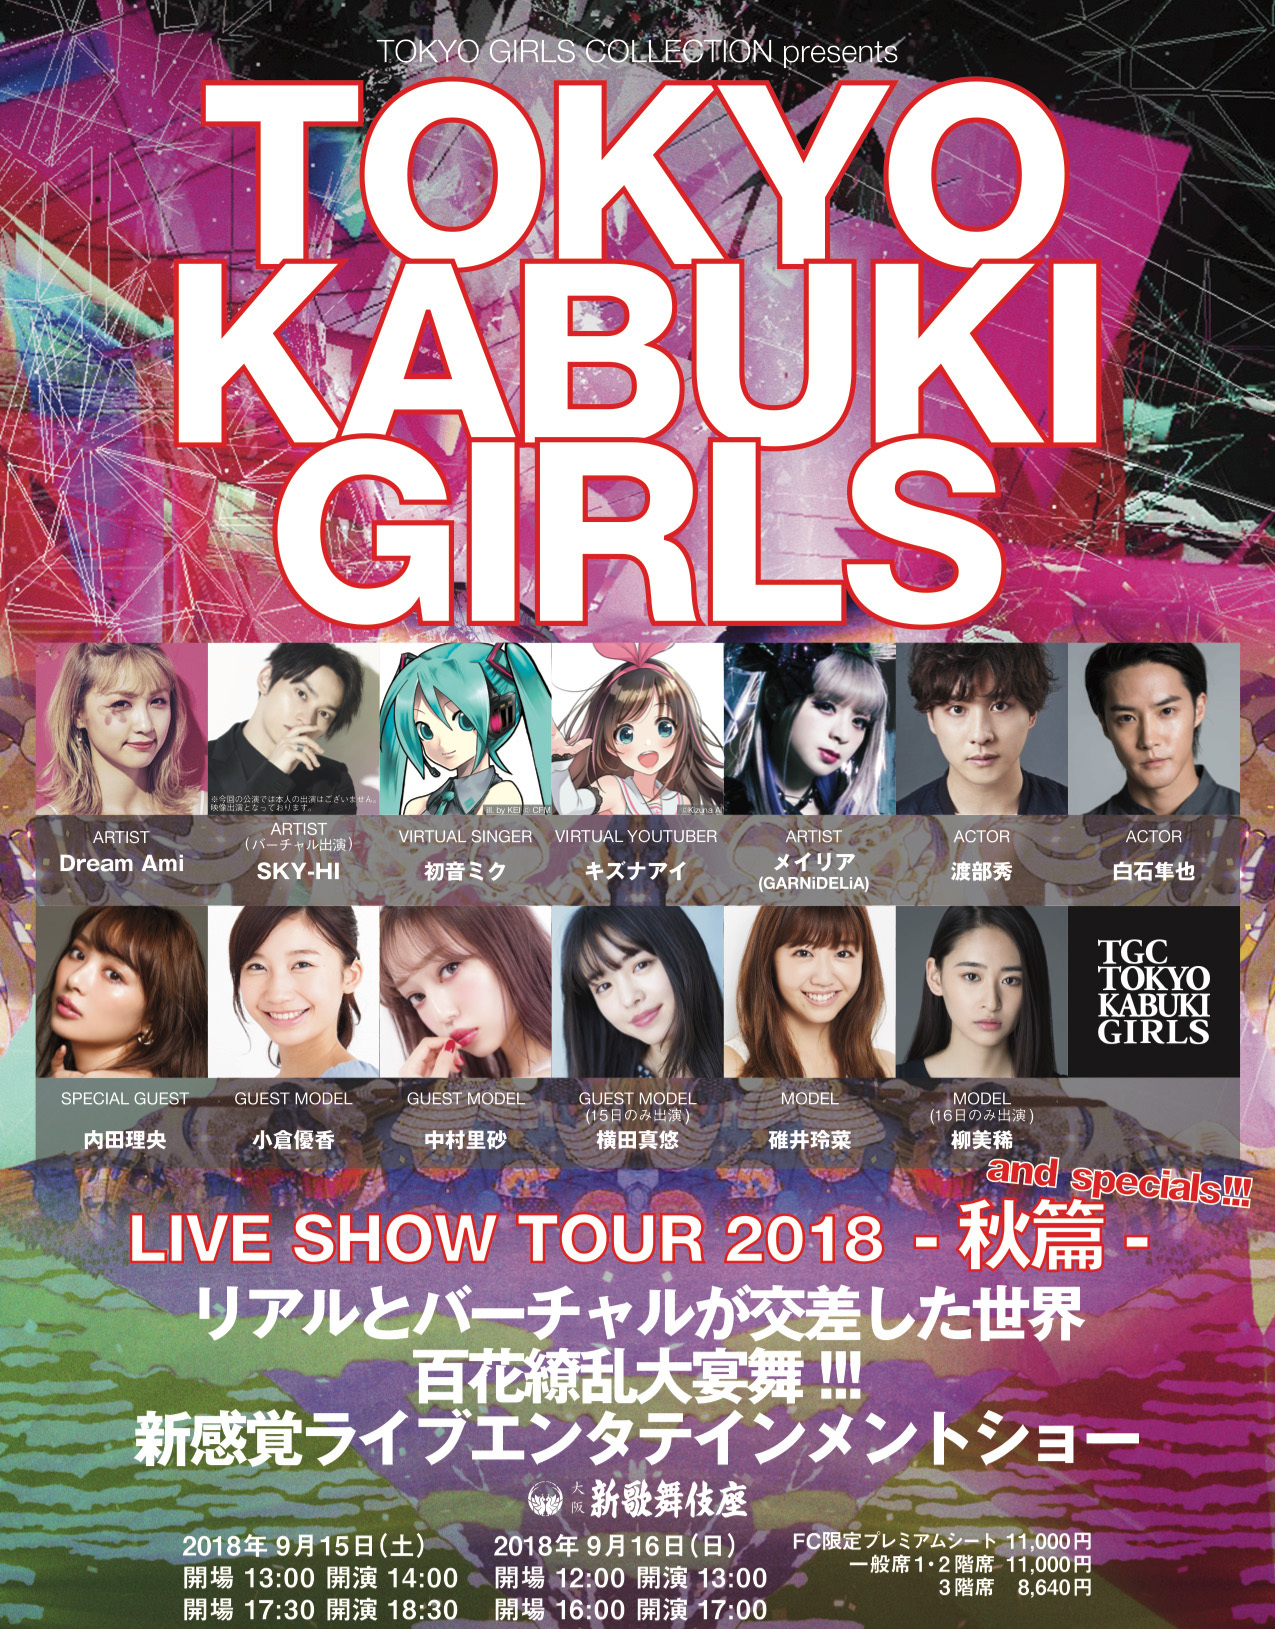 『TOKYO GIRLS COLLECTION presents TOKYO KABUKI GIRLS』メインビジュアル